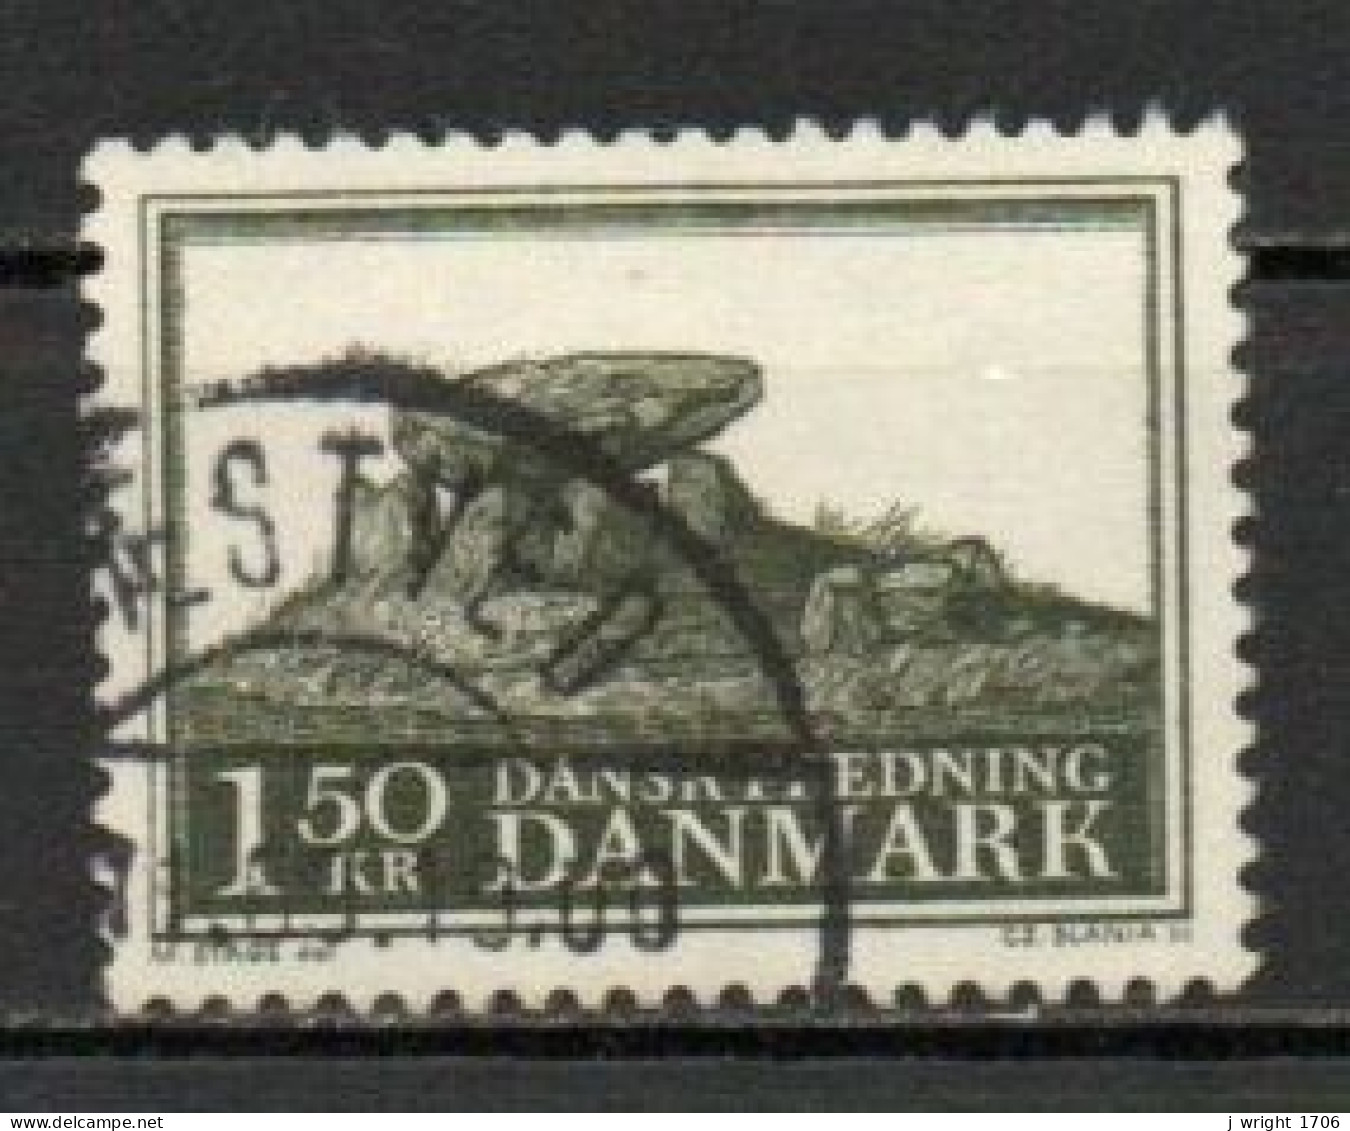 Denmark, 1966, Natural Preservation/Dolmen Grave Jutland, 1.50kr, USED - Usati